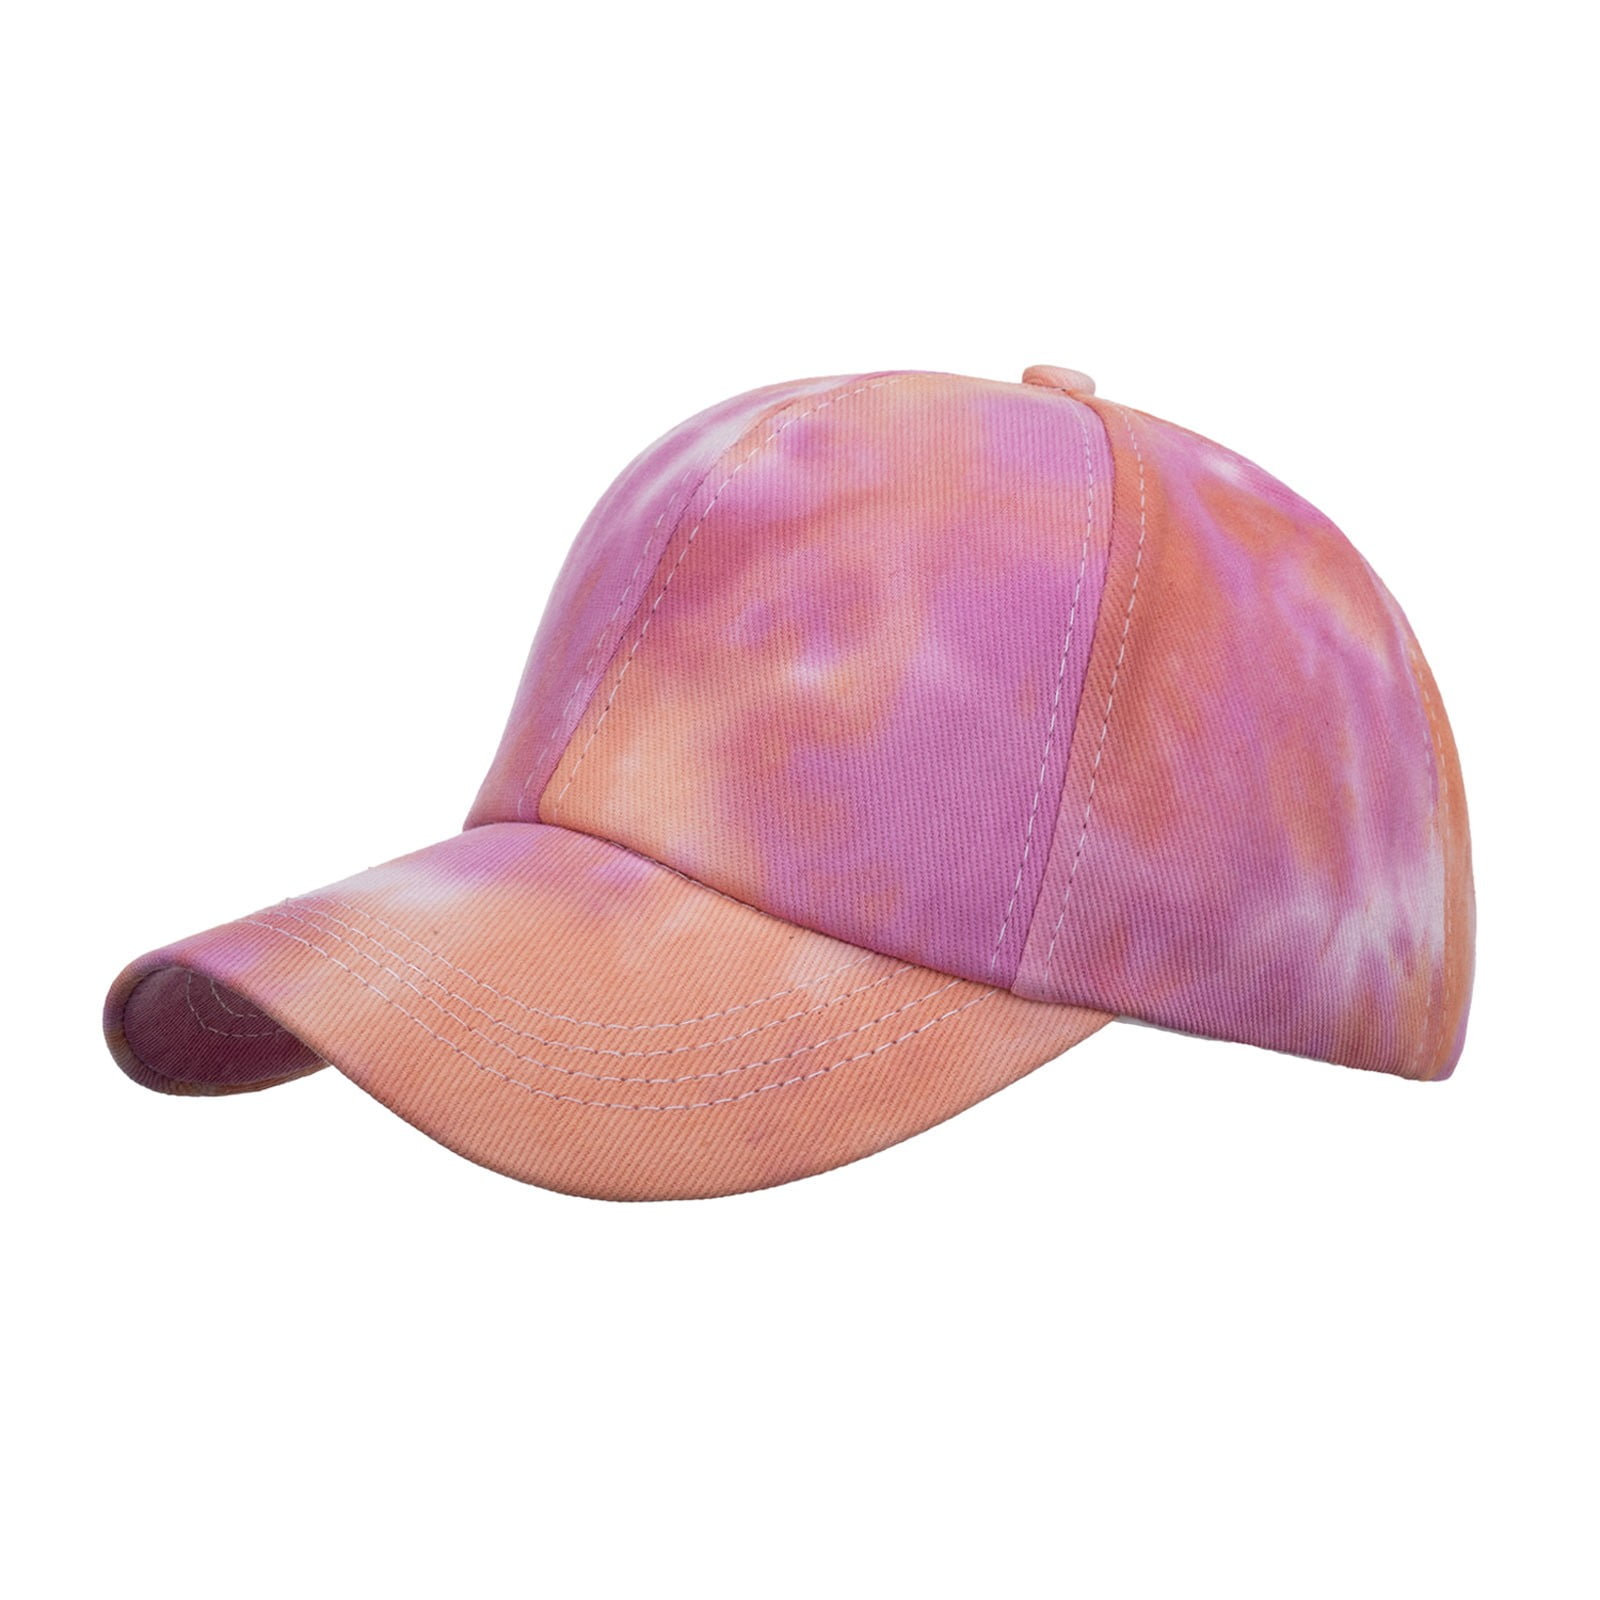 baseball hat breathable women adjustable winter mnjin c baseball sport men for caps beach hat dye fashion beanies sun gradient tie cap